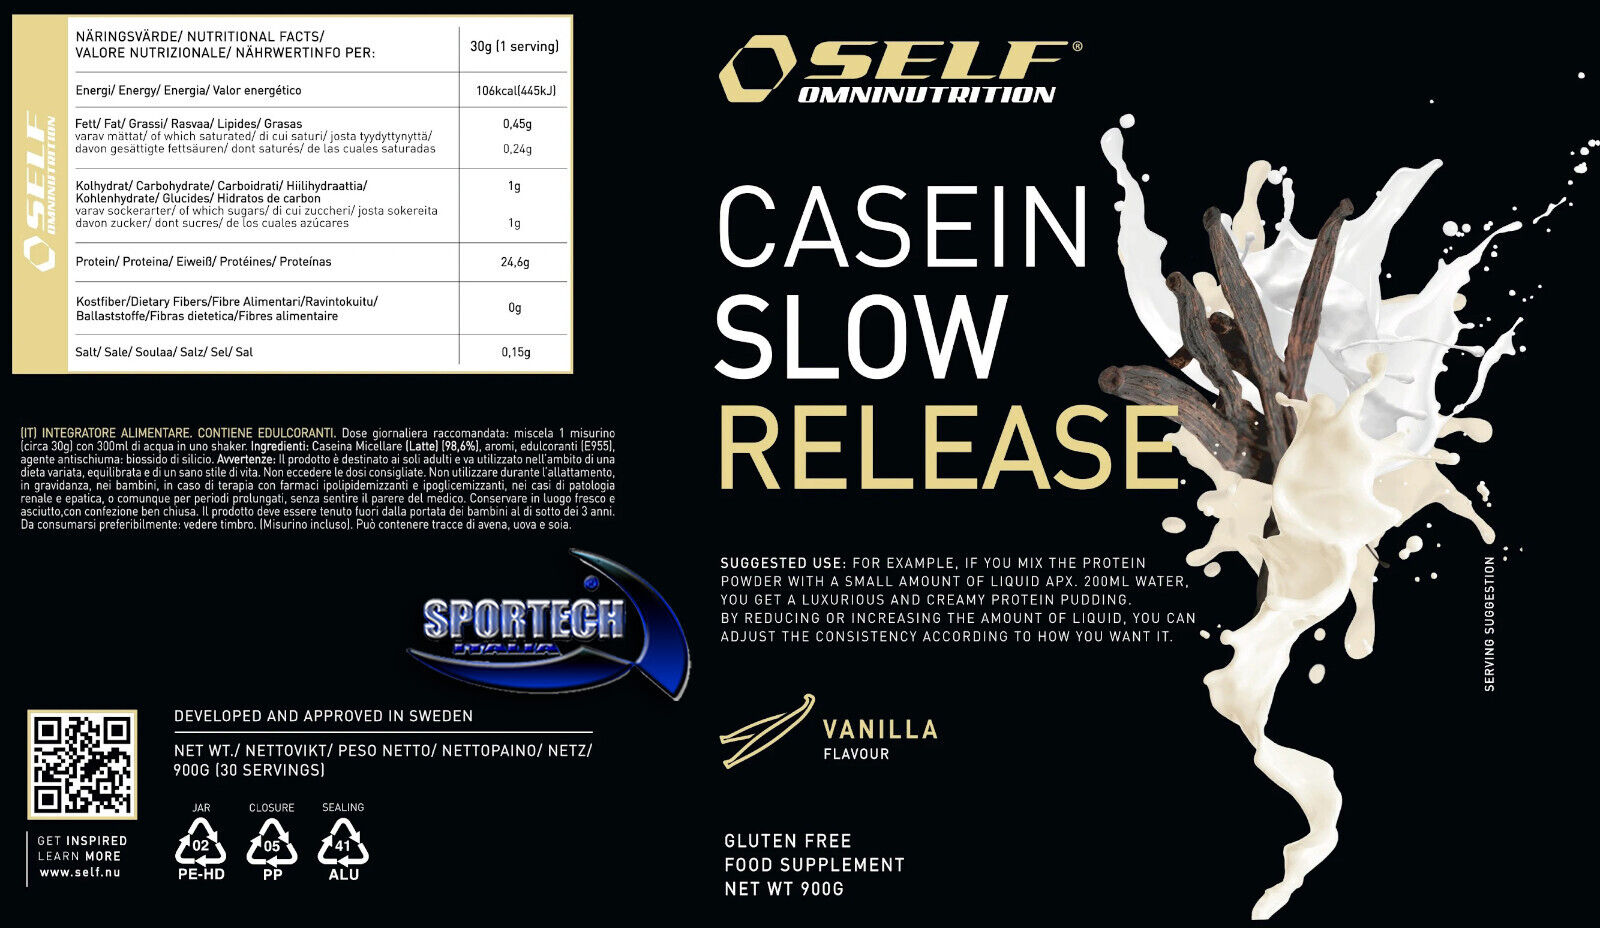 Self CASEIN SLOW RELEASE PROTEIN 900g proteine caseina a rilascio graduale - Punto Fitness